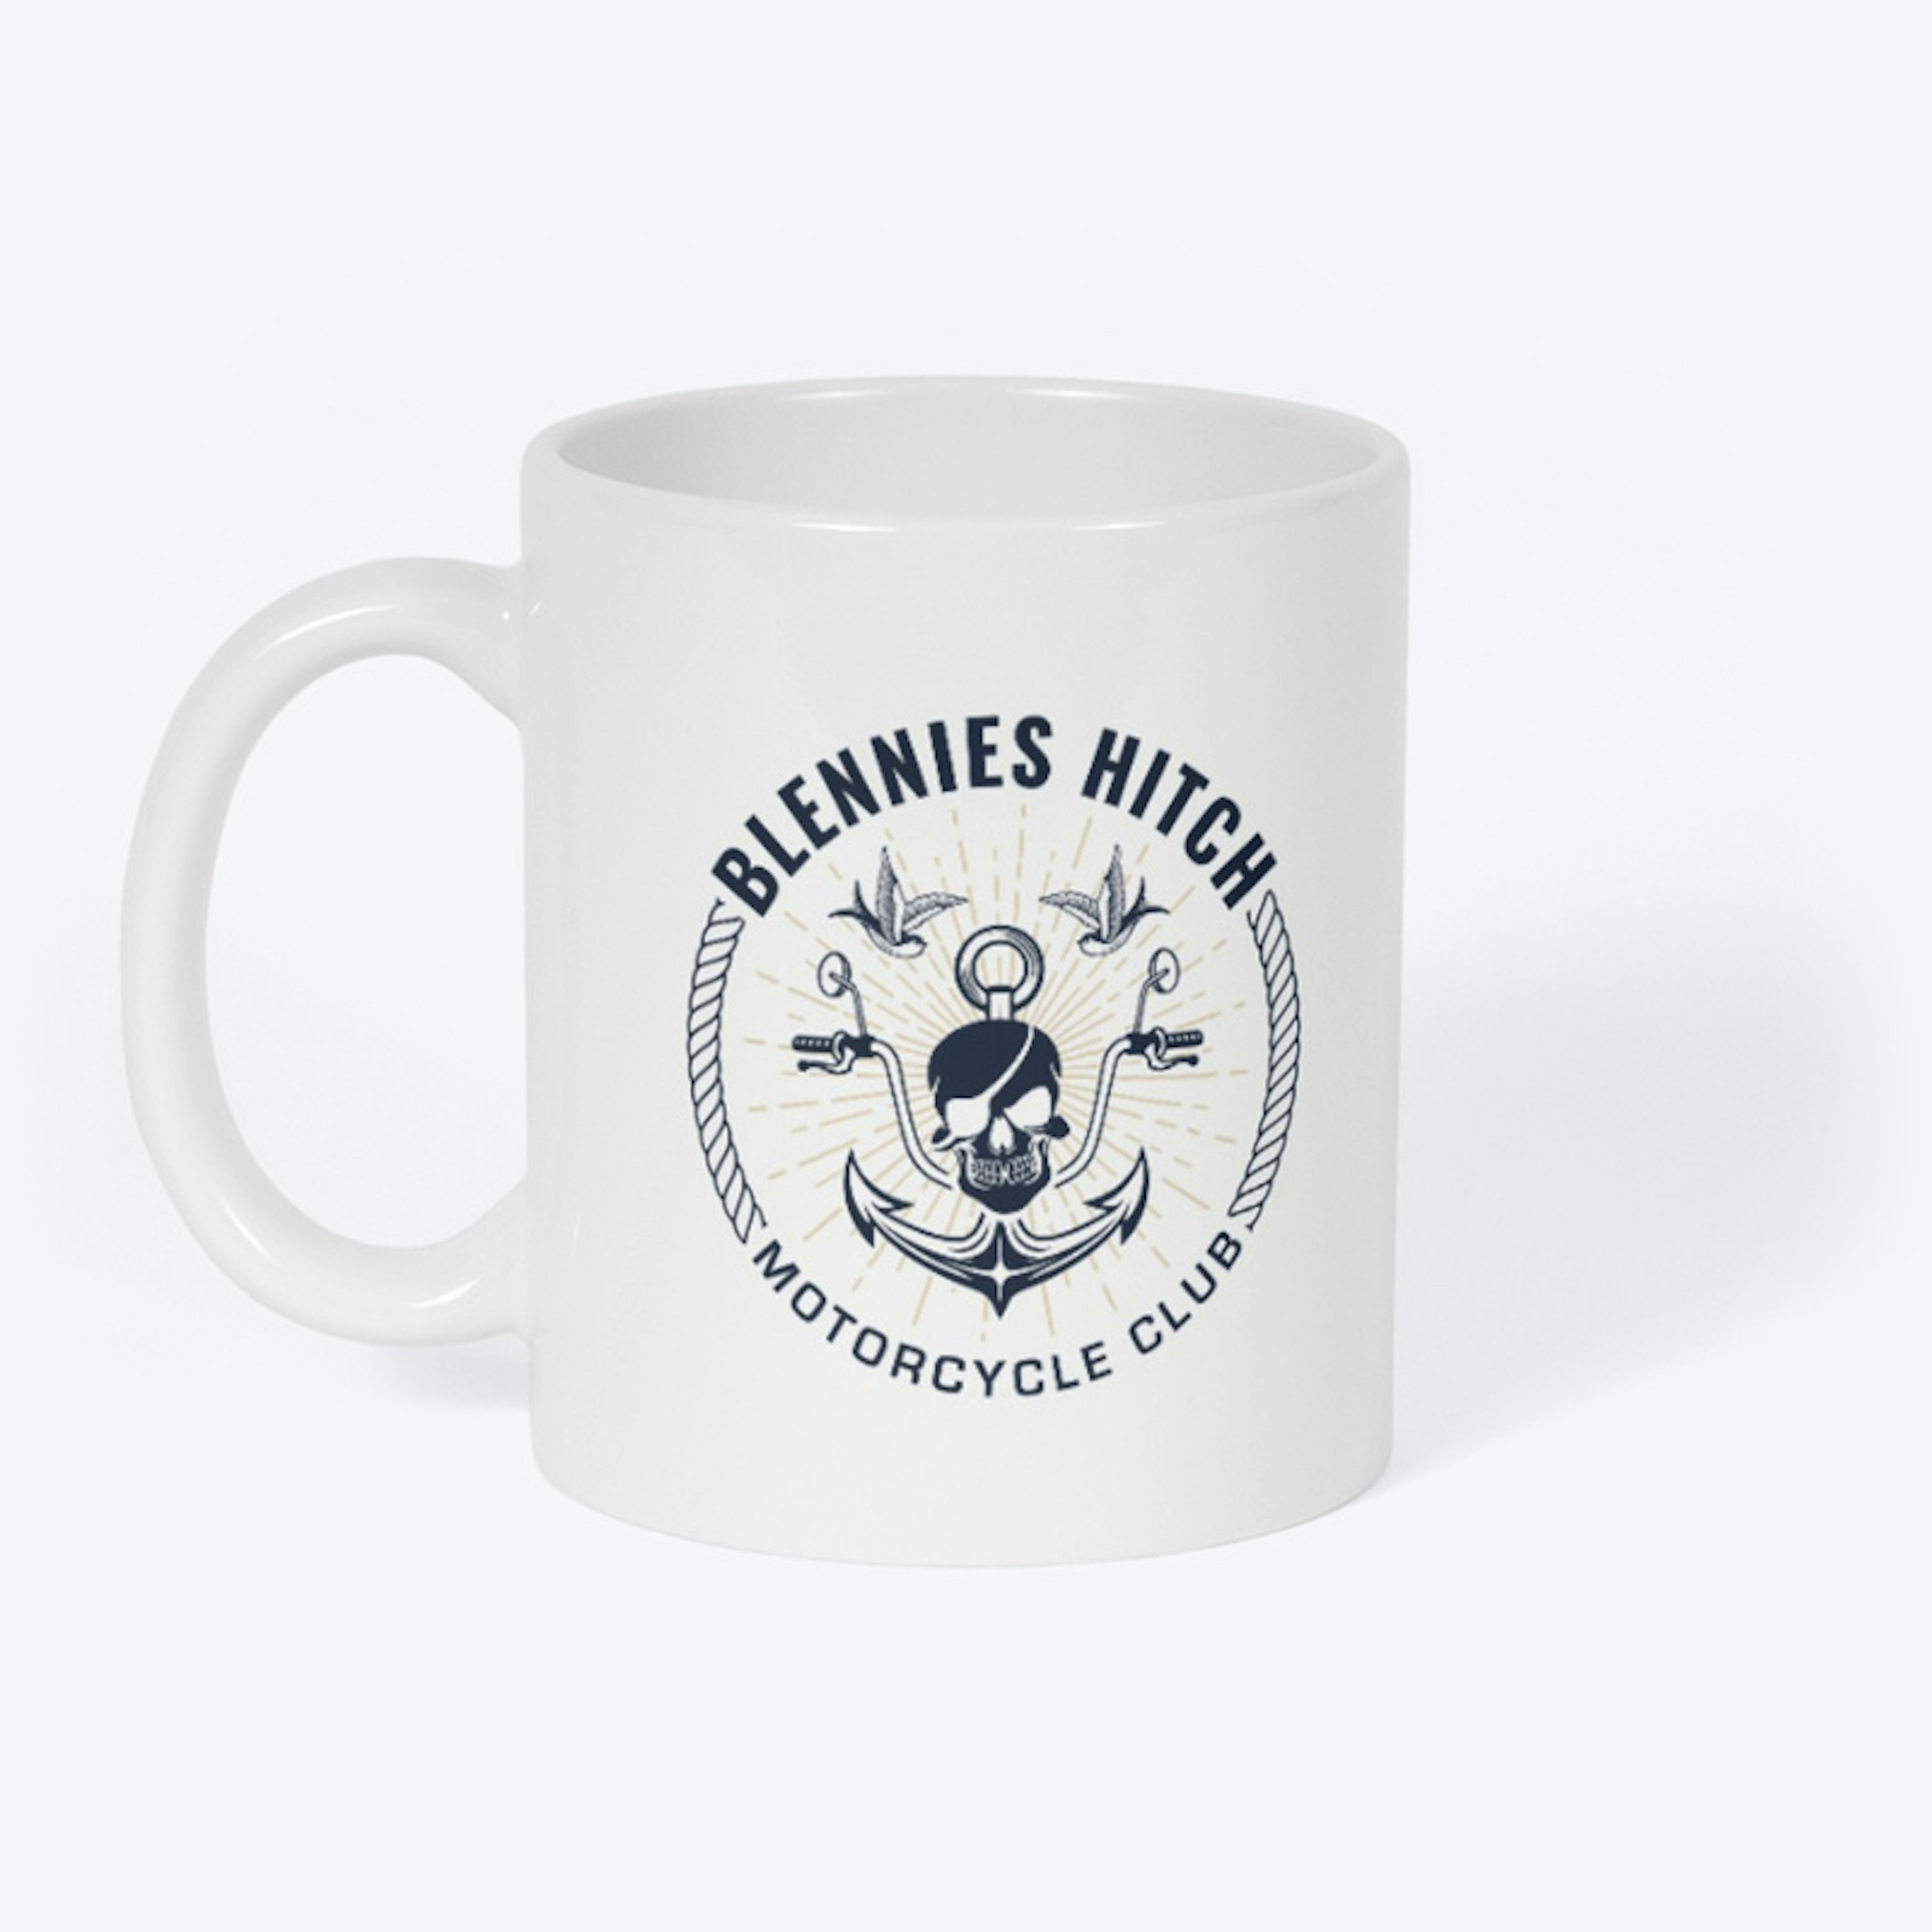 Blennies Hitch MC mug